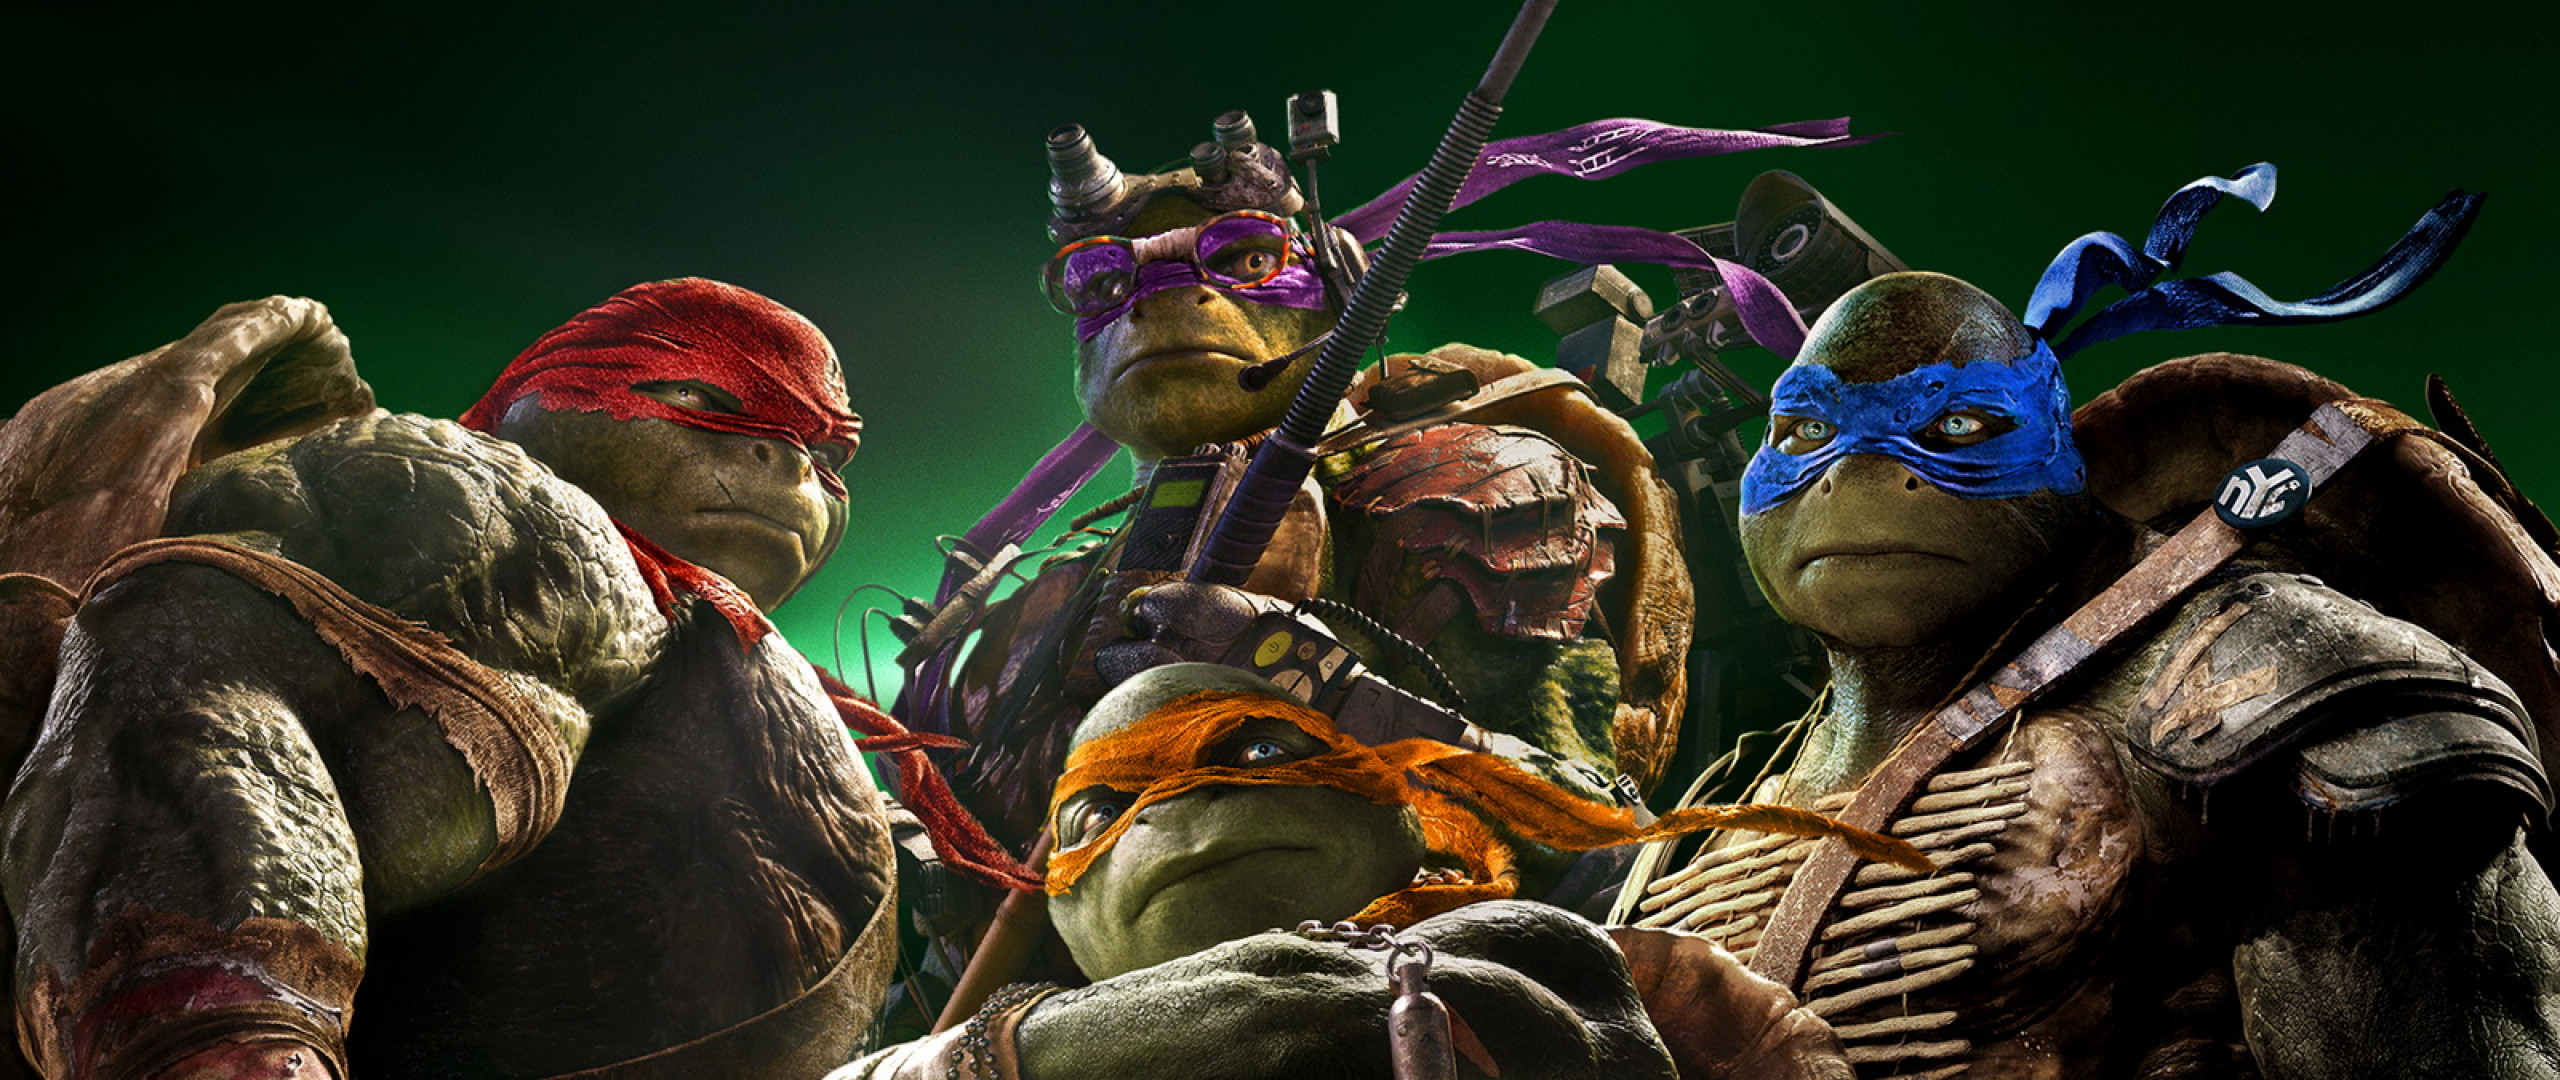 Ninja turtles песни. Черепашки-ниндзя (Blu-ray 4k). Черепашки-ниндзя (Blu-ray). Once there were three Turtles.